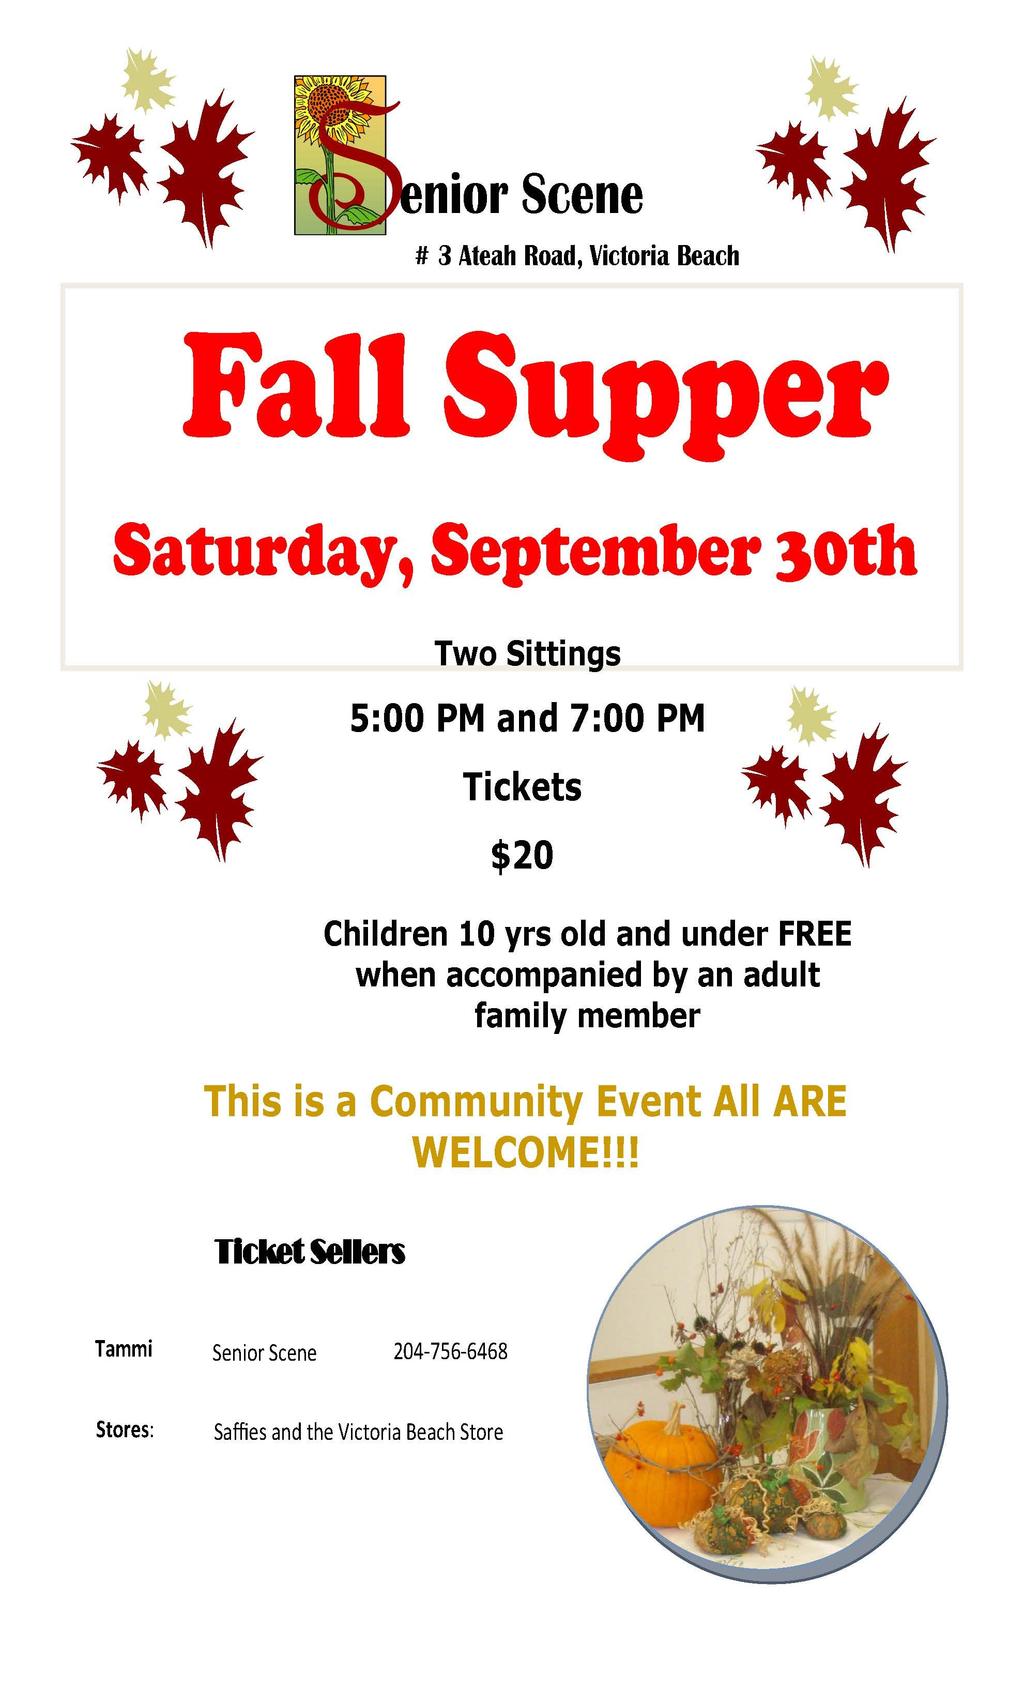 Fall Supper Tickets